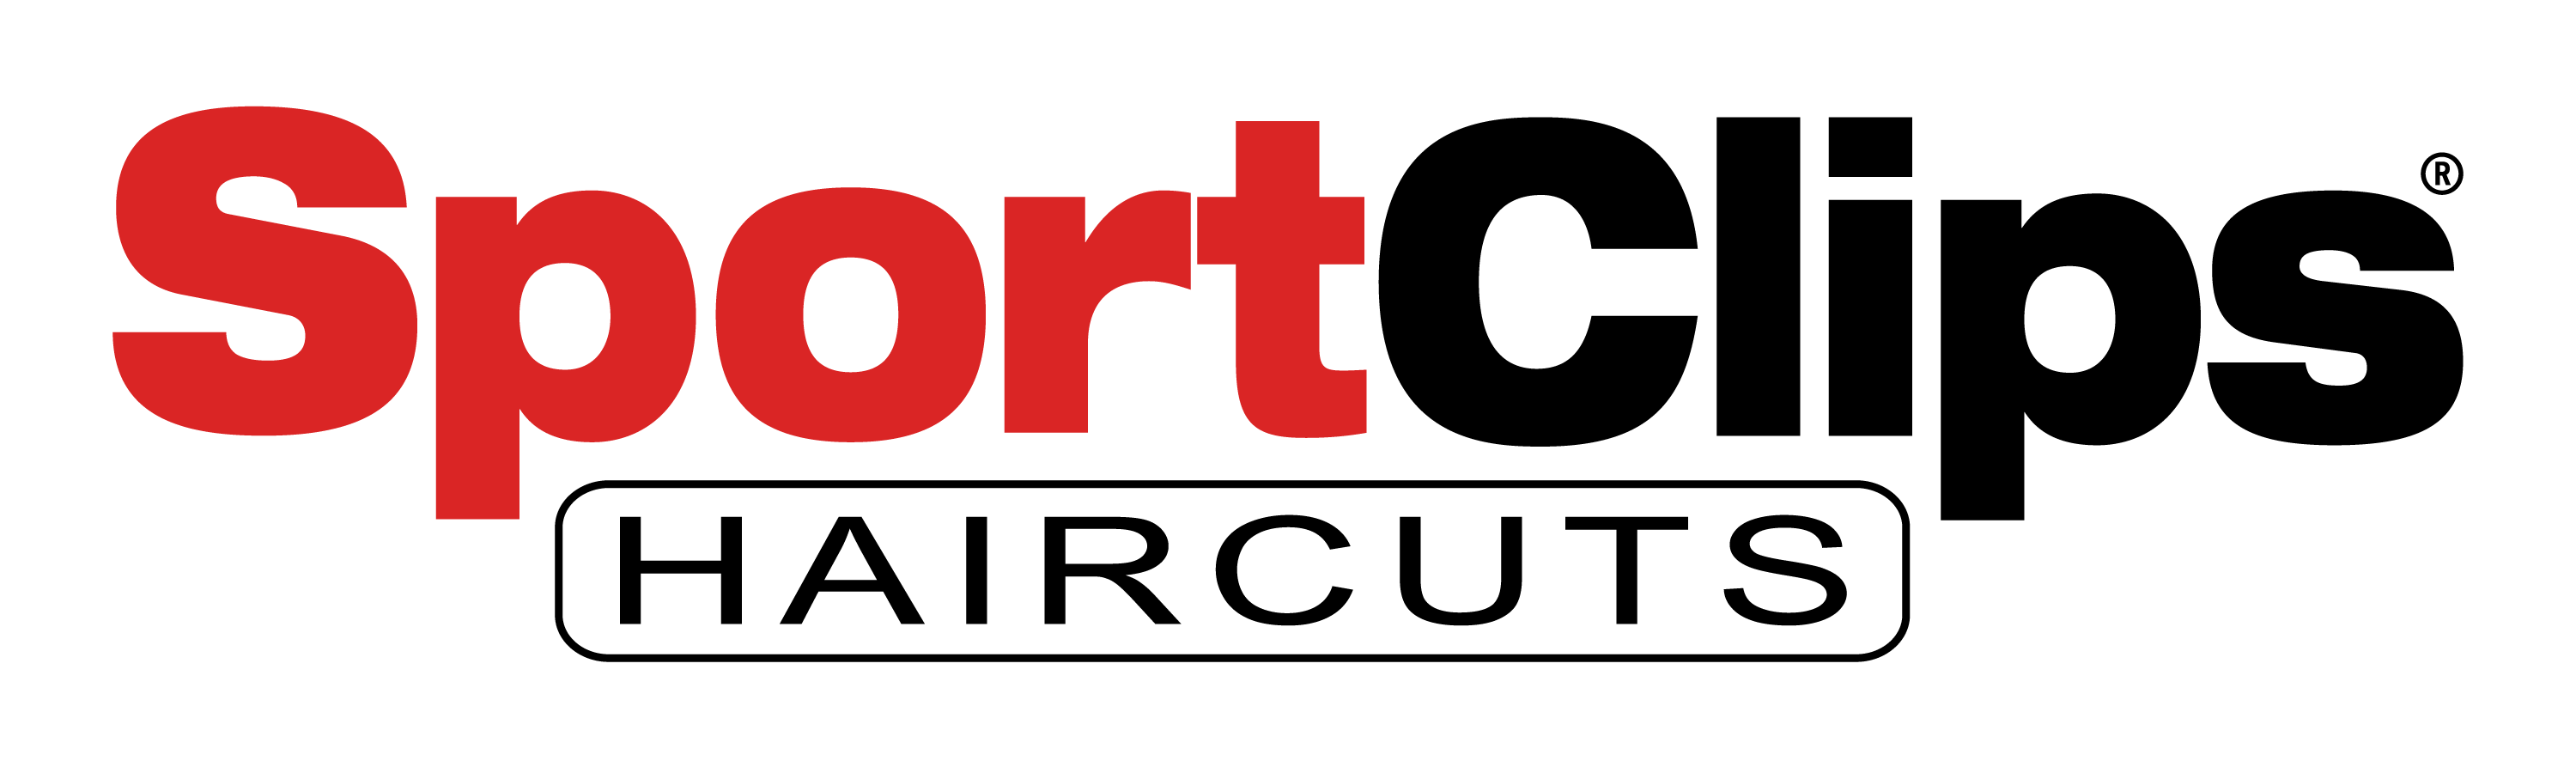 Sports Clips Haircuts Logo